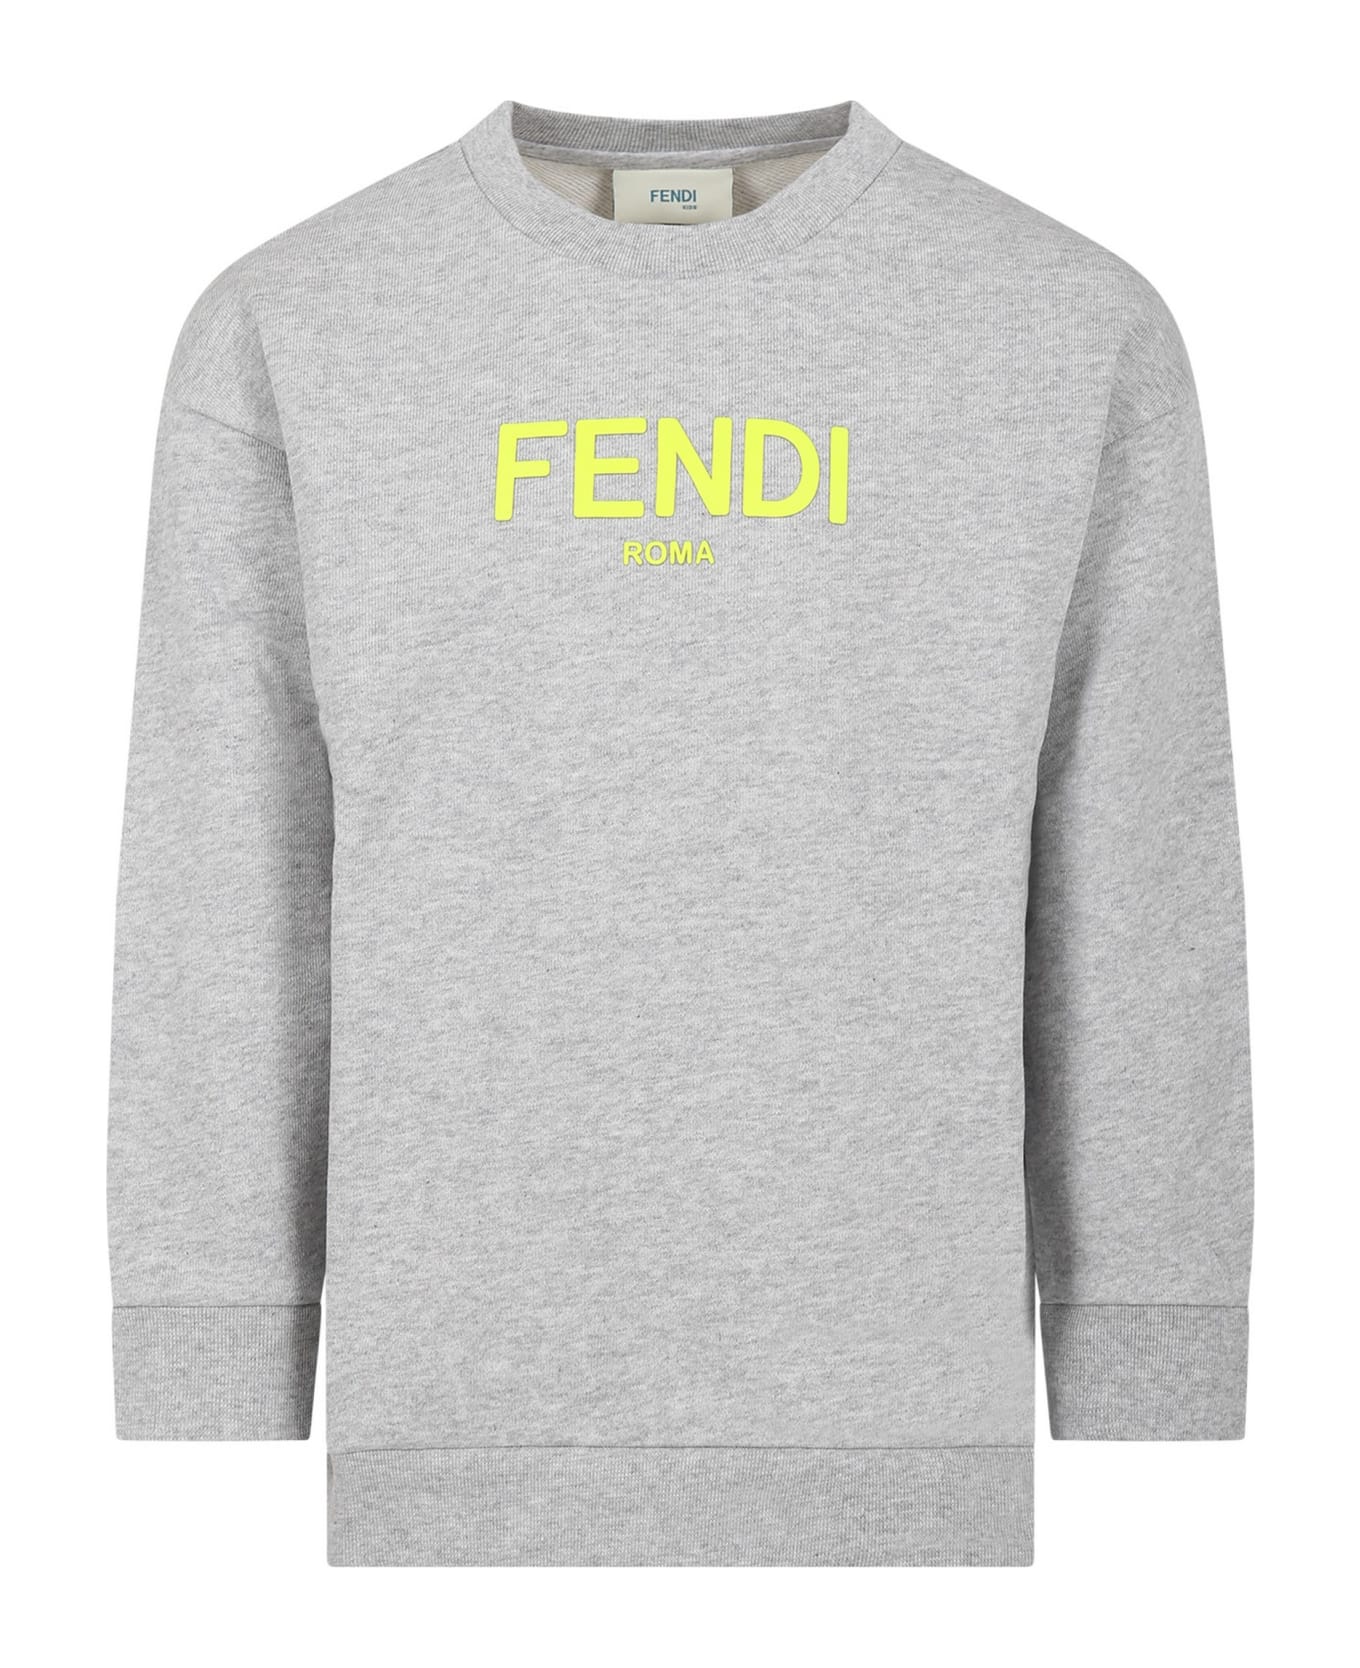 Fendi Grey Sweatshirt For Kids With Logo - Grey